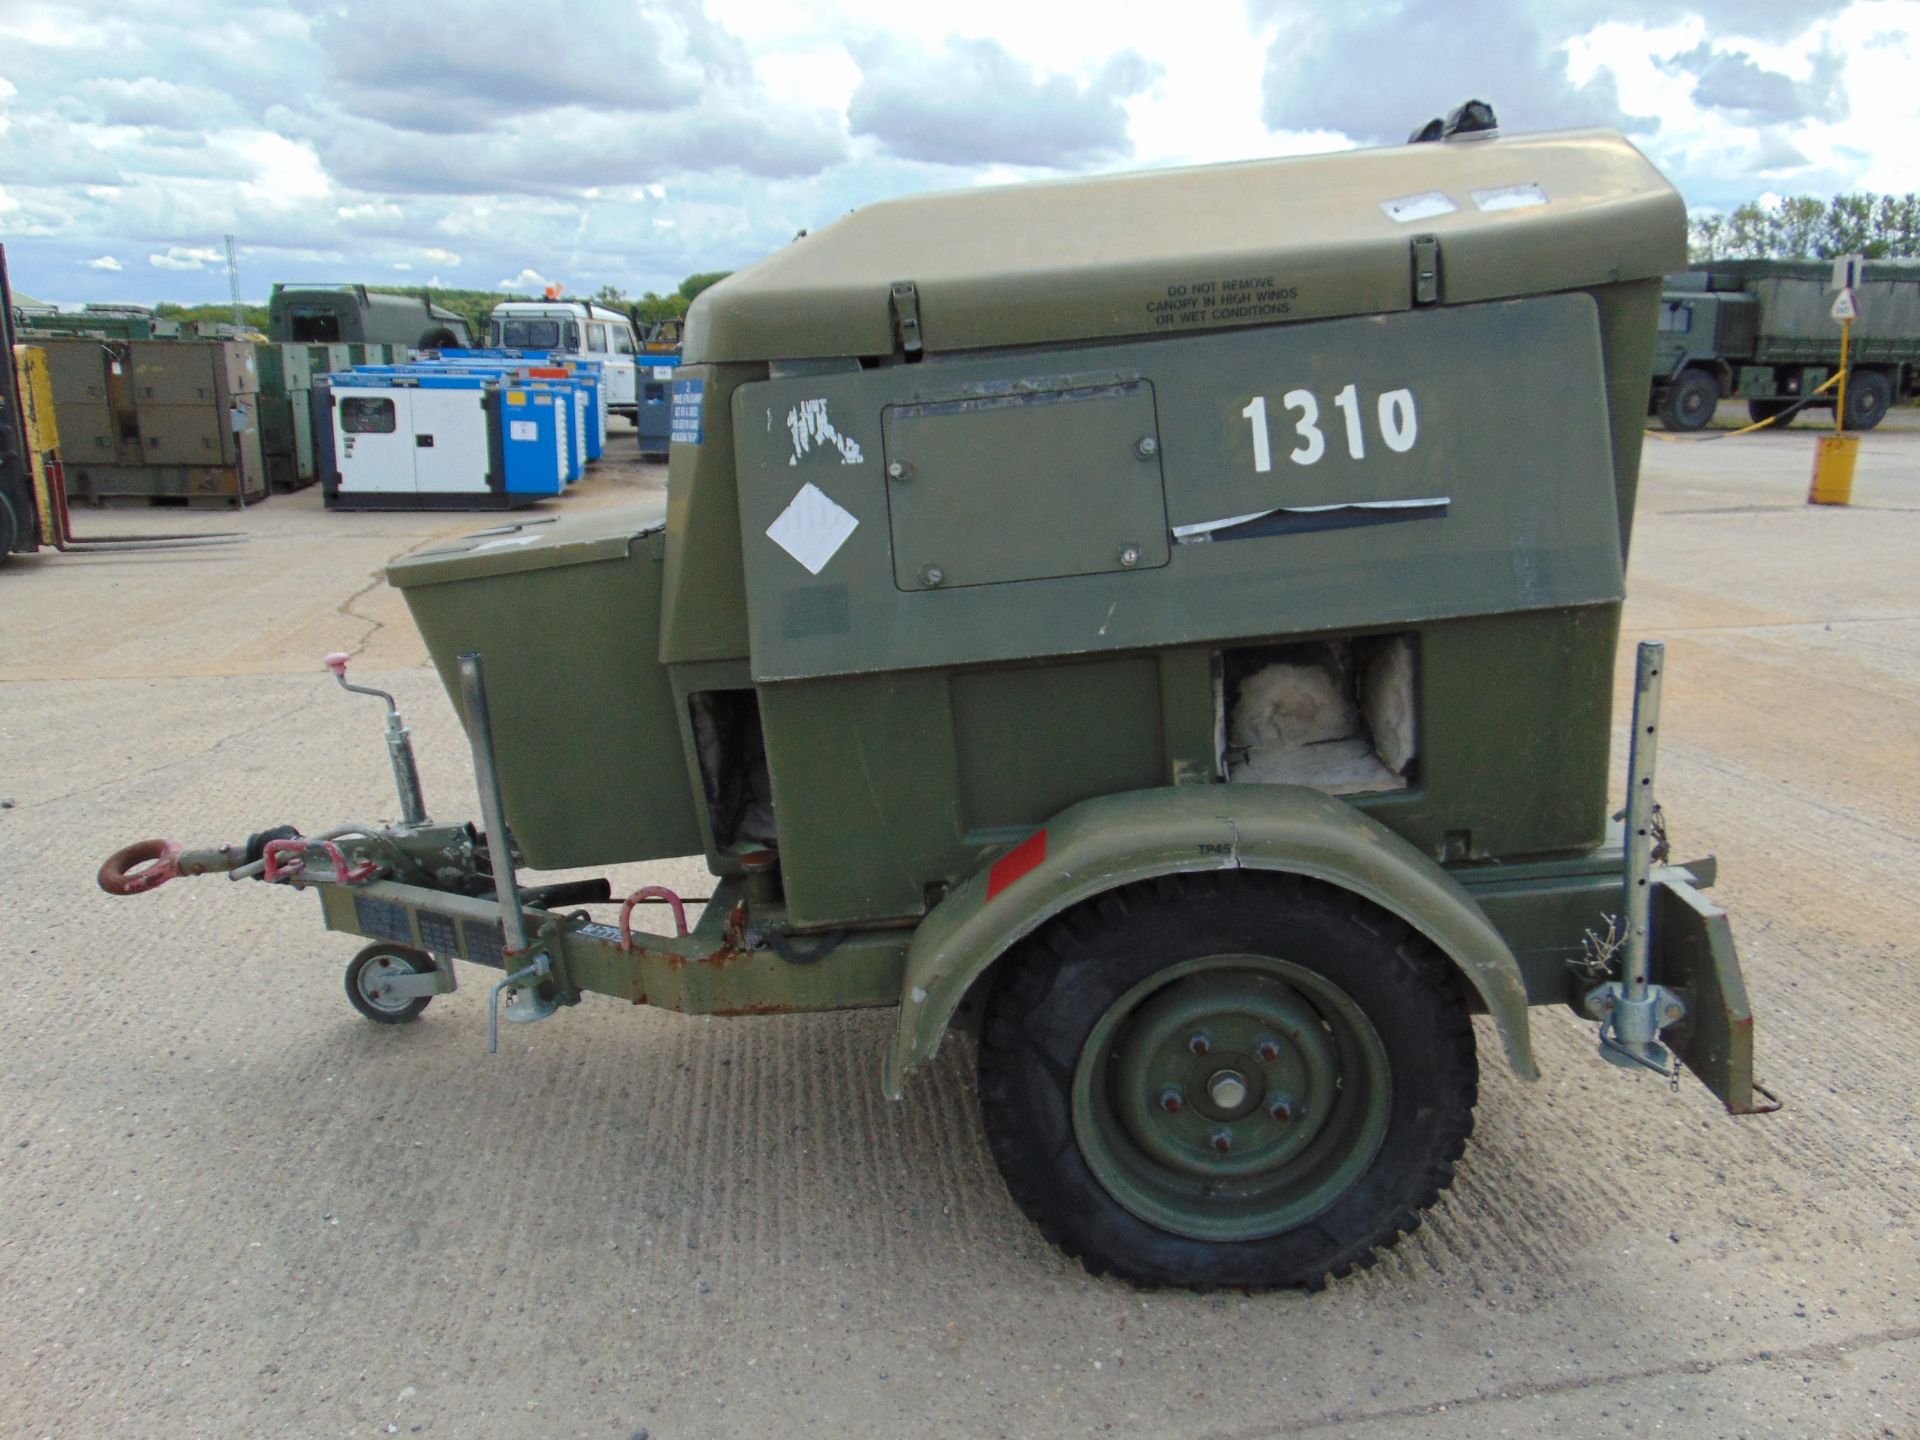 Ex Uk Royal Air Force Trailer Mounted 25 KVA Generator - Image 4 of 13